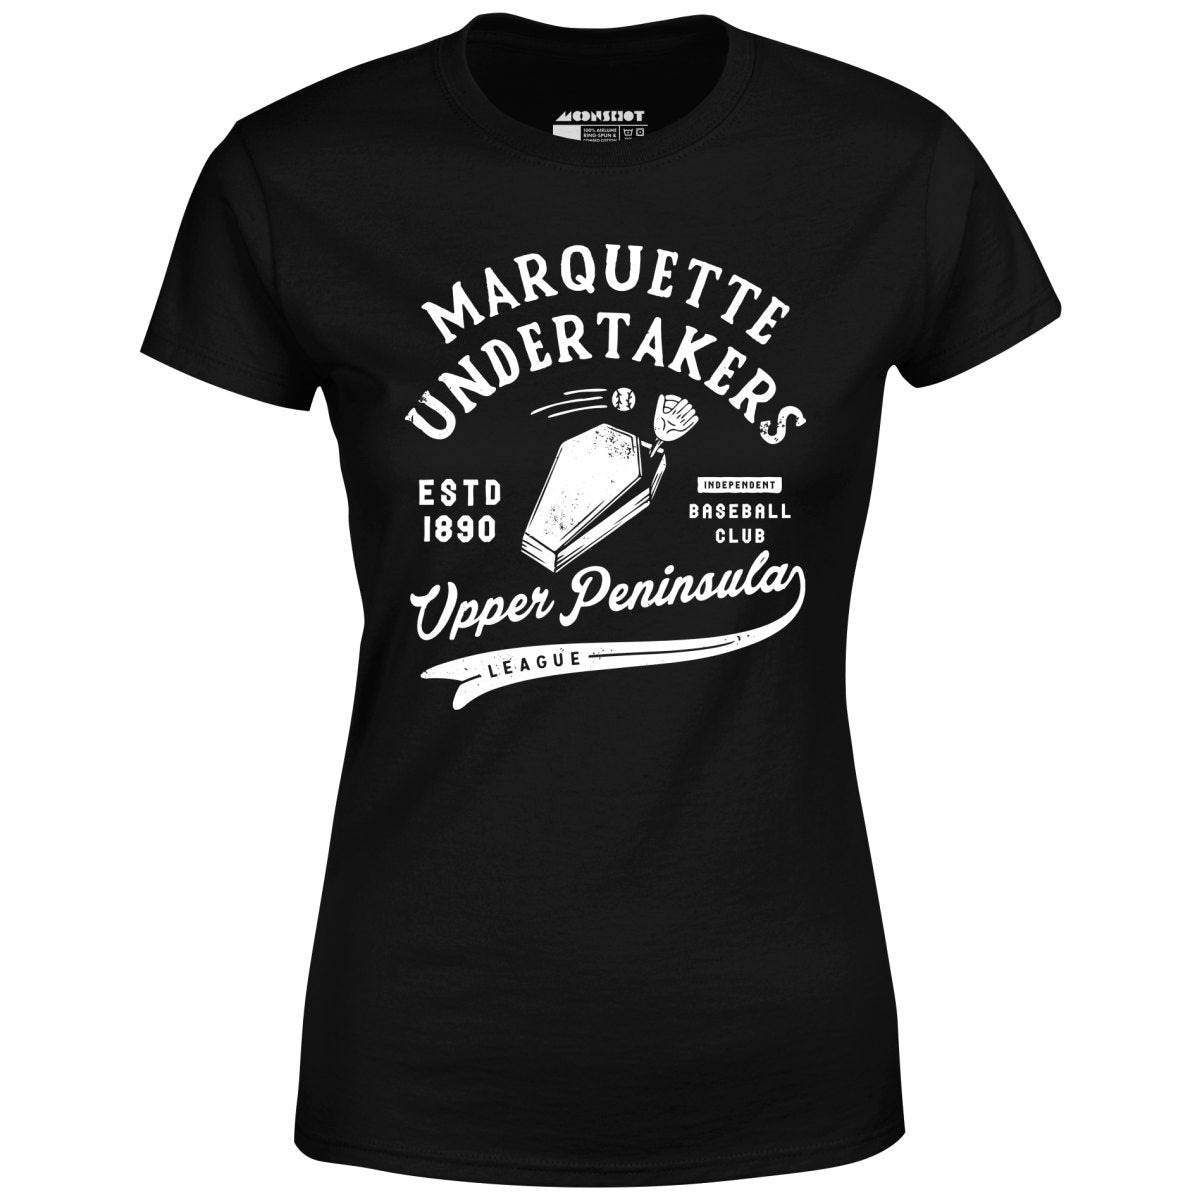 Marquette Undertakers - Michigan - Vintage Defunct Baseball Teams - Women's T-Shirt